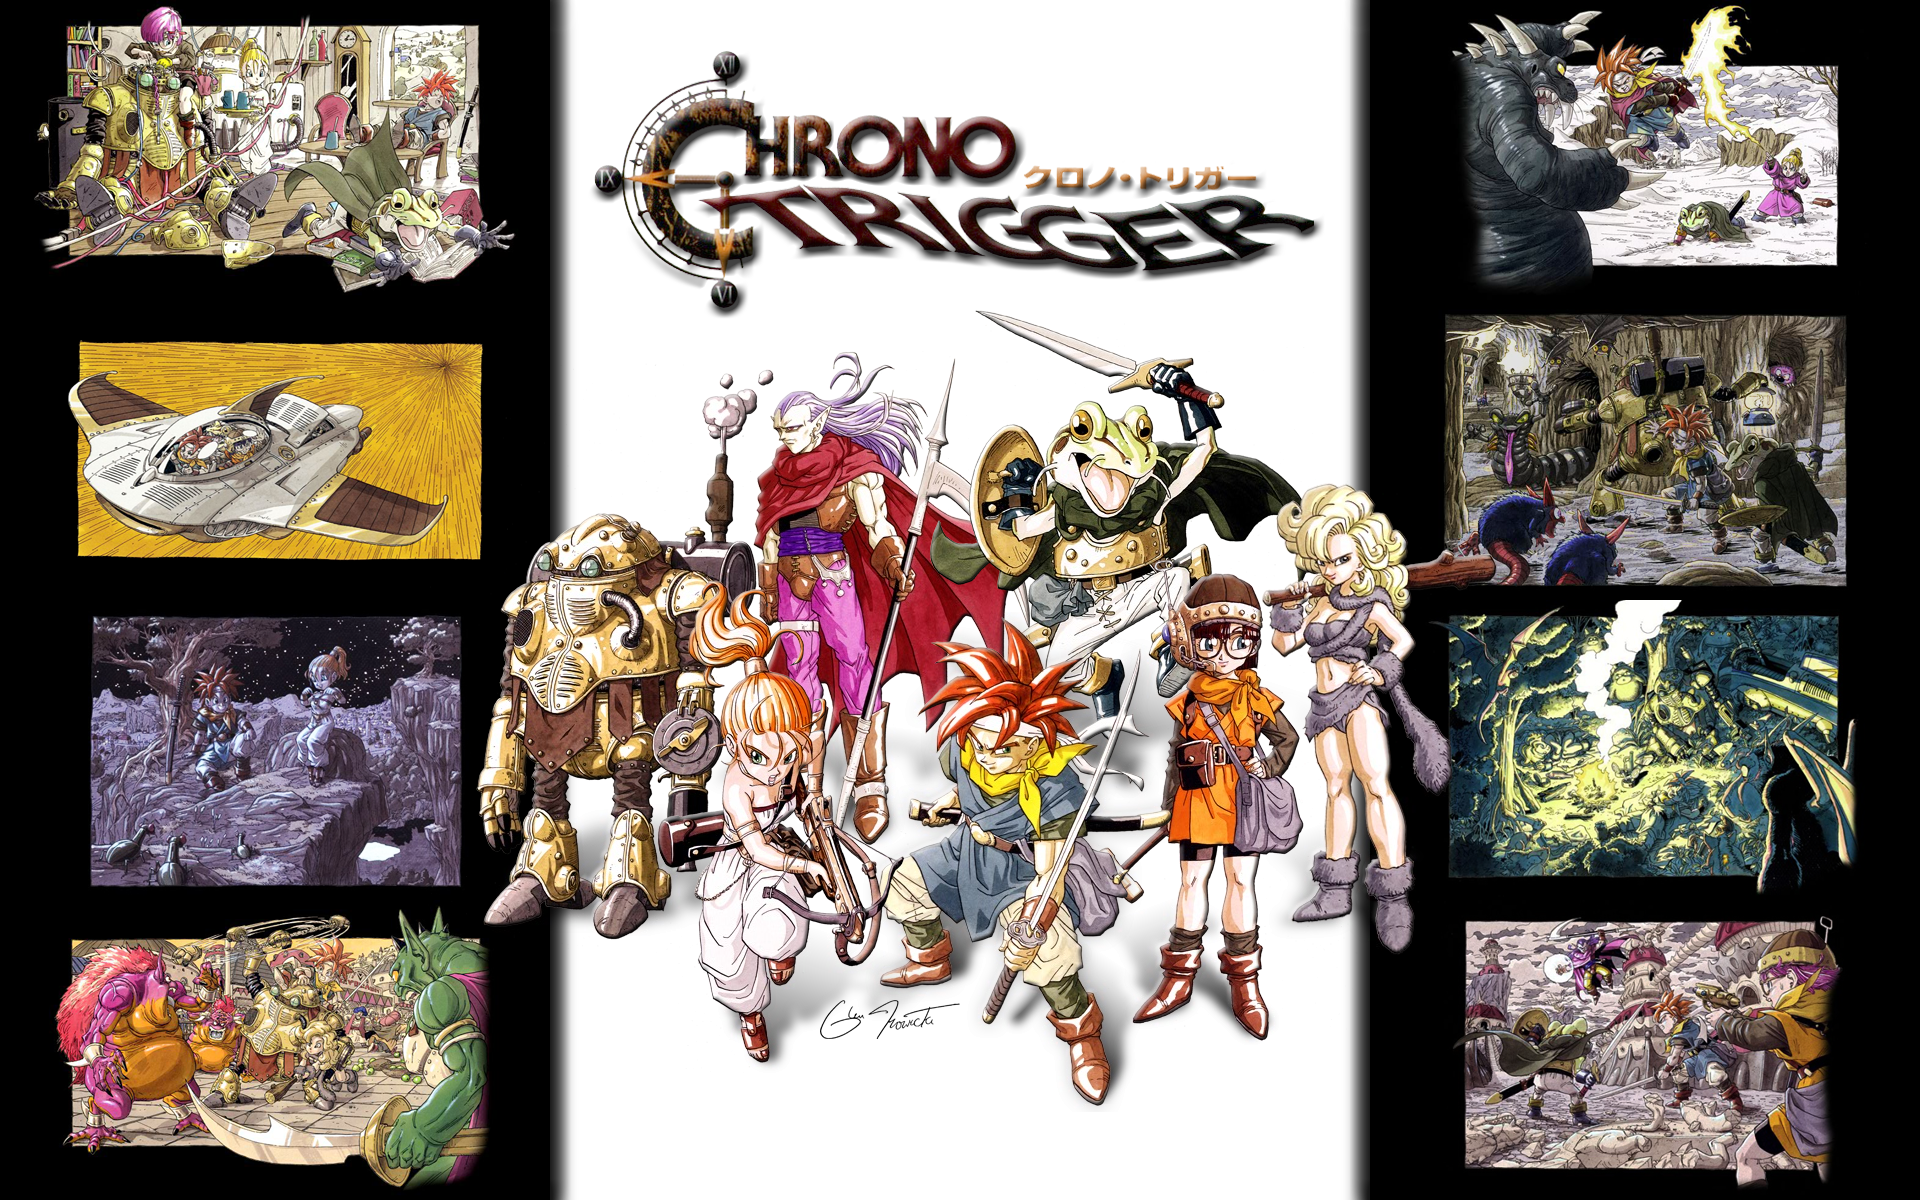 Chrono Trigger Wallpapers